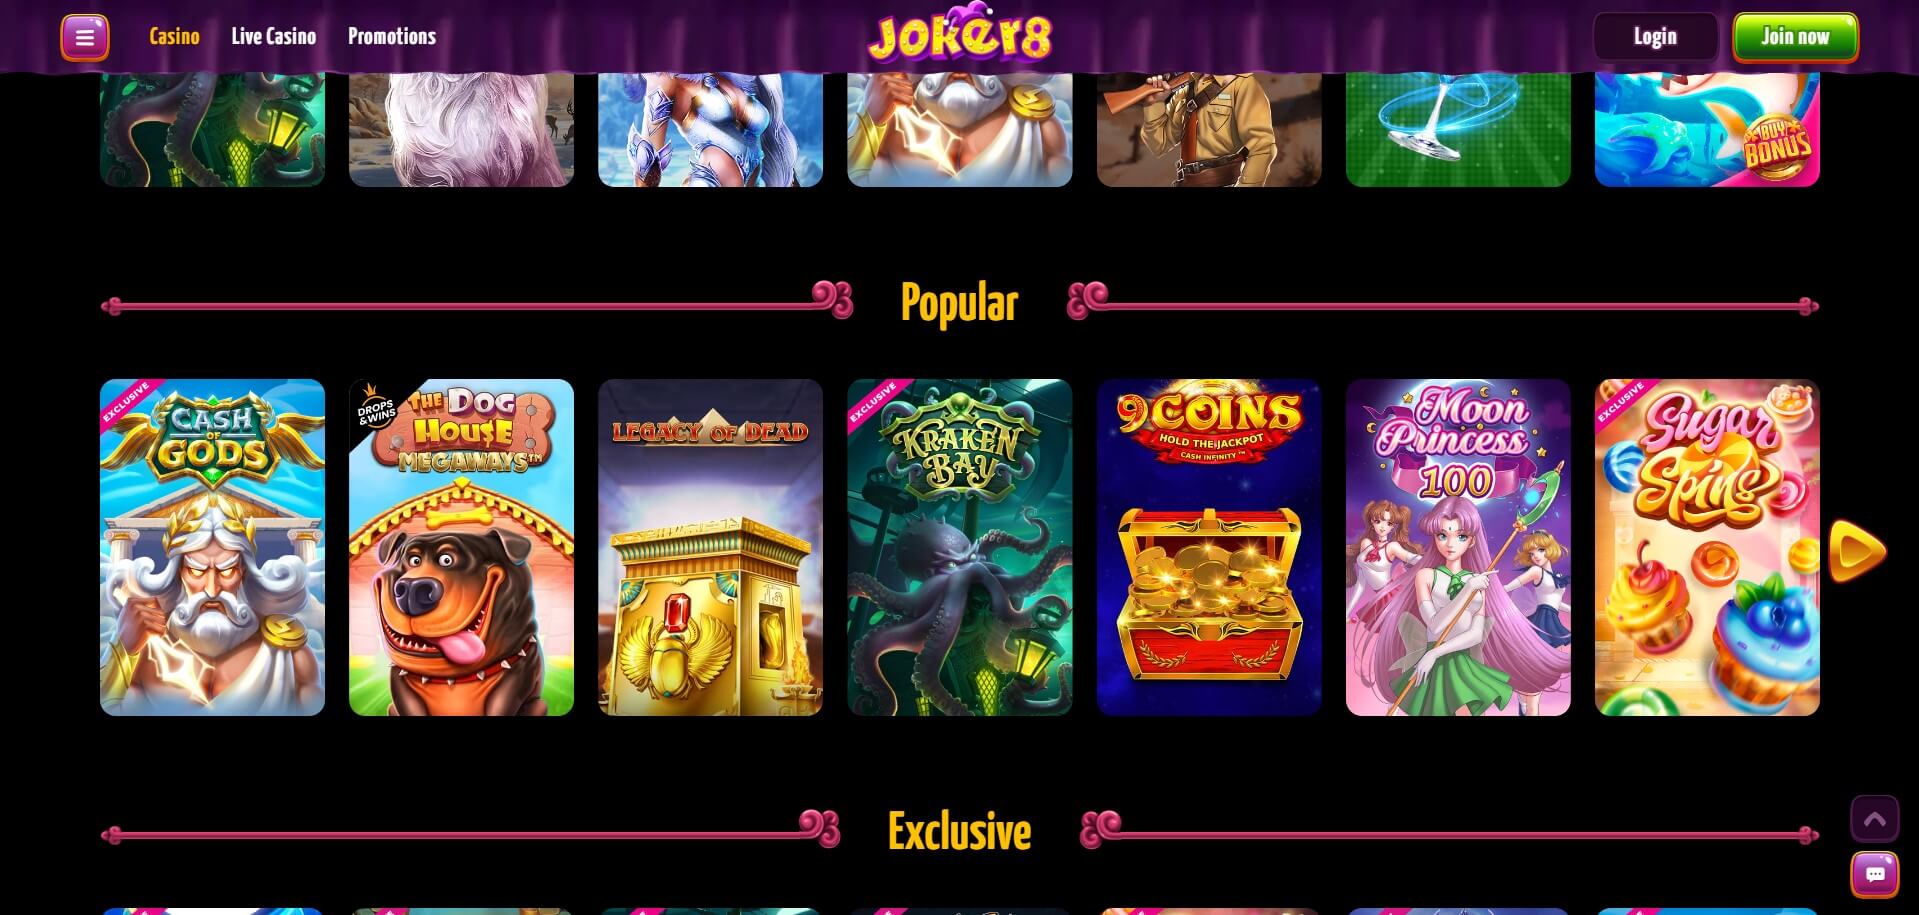 Joker8 Casino Games